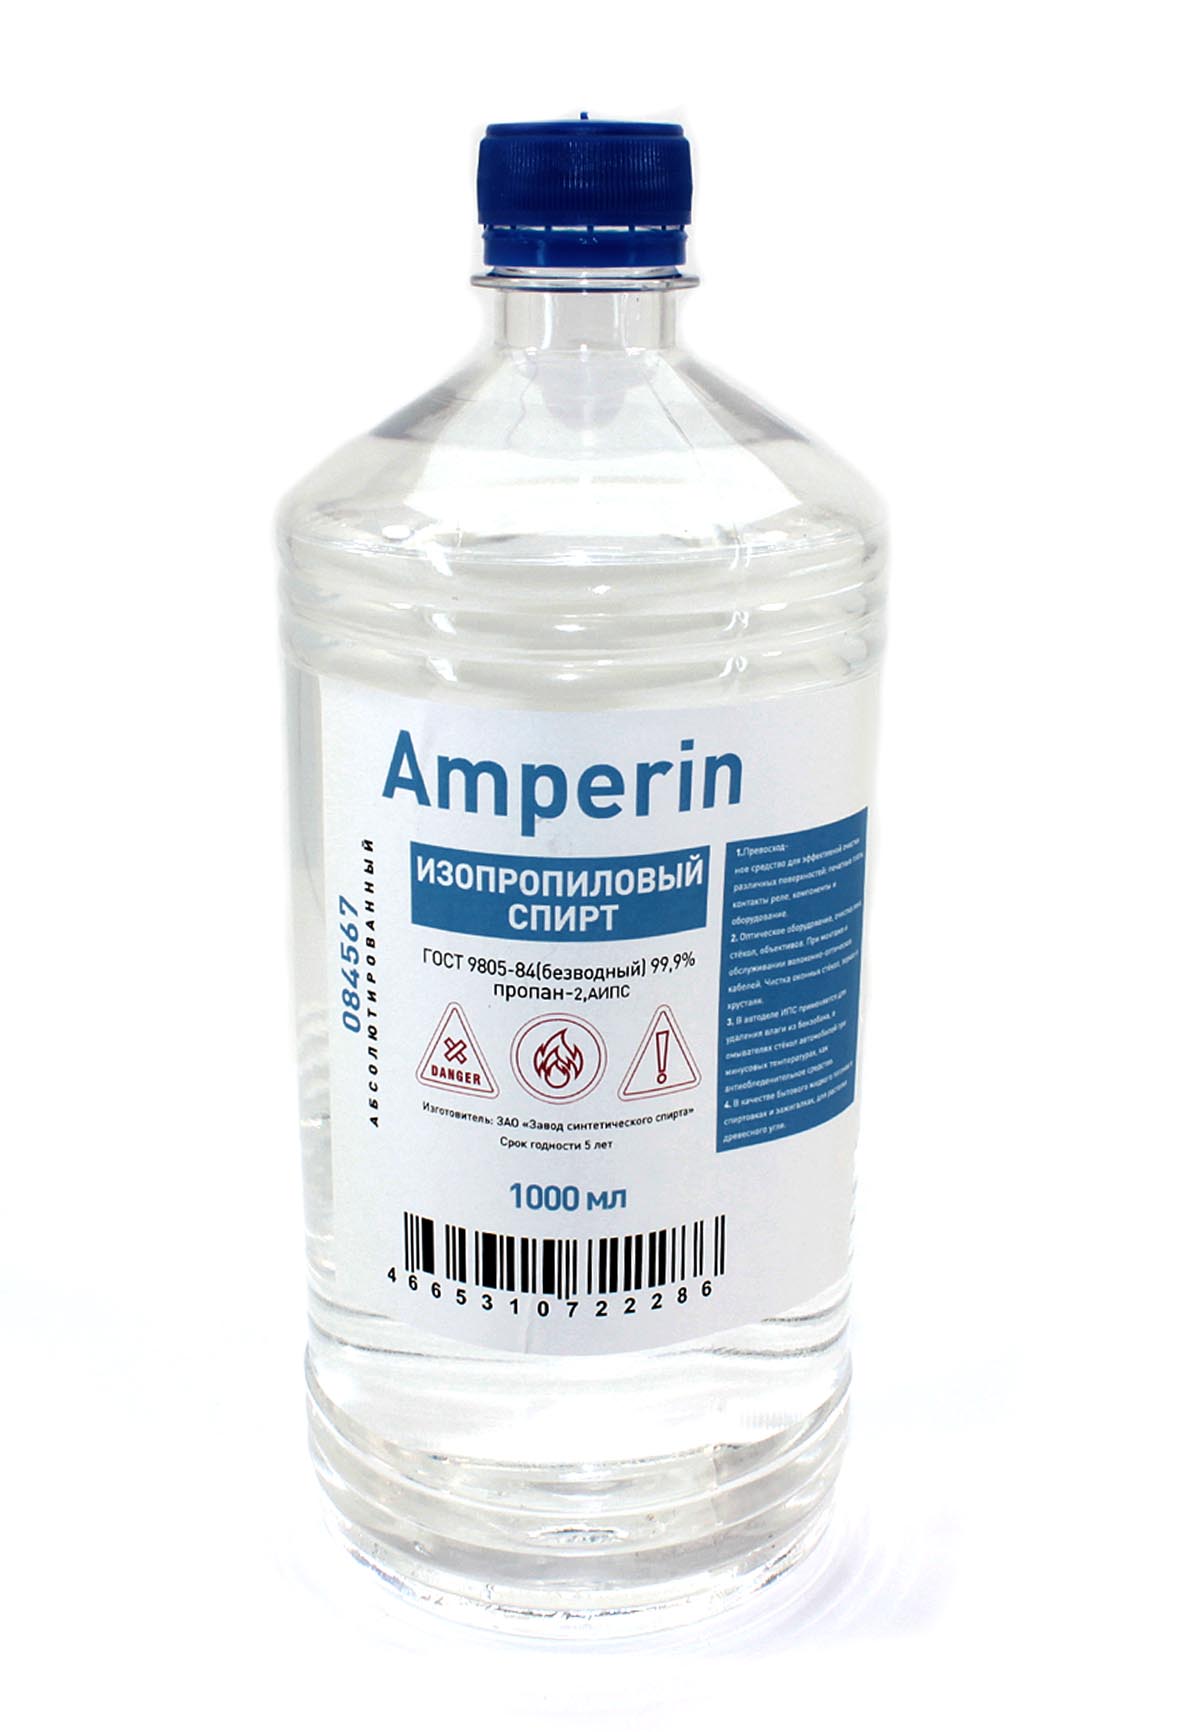 Спирт изопропиловый Amperin, бутылка - 1л. a7 memobottle бутылка